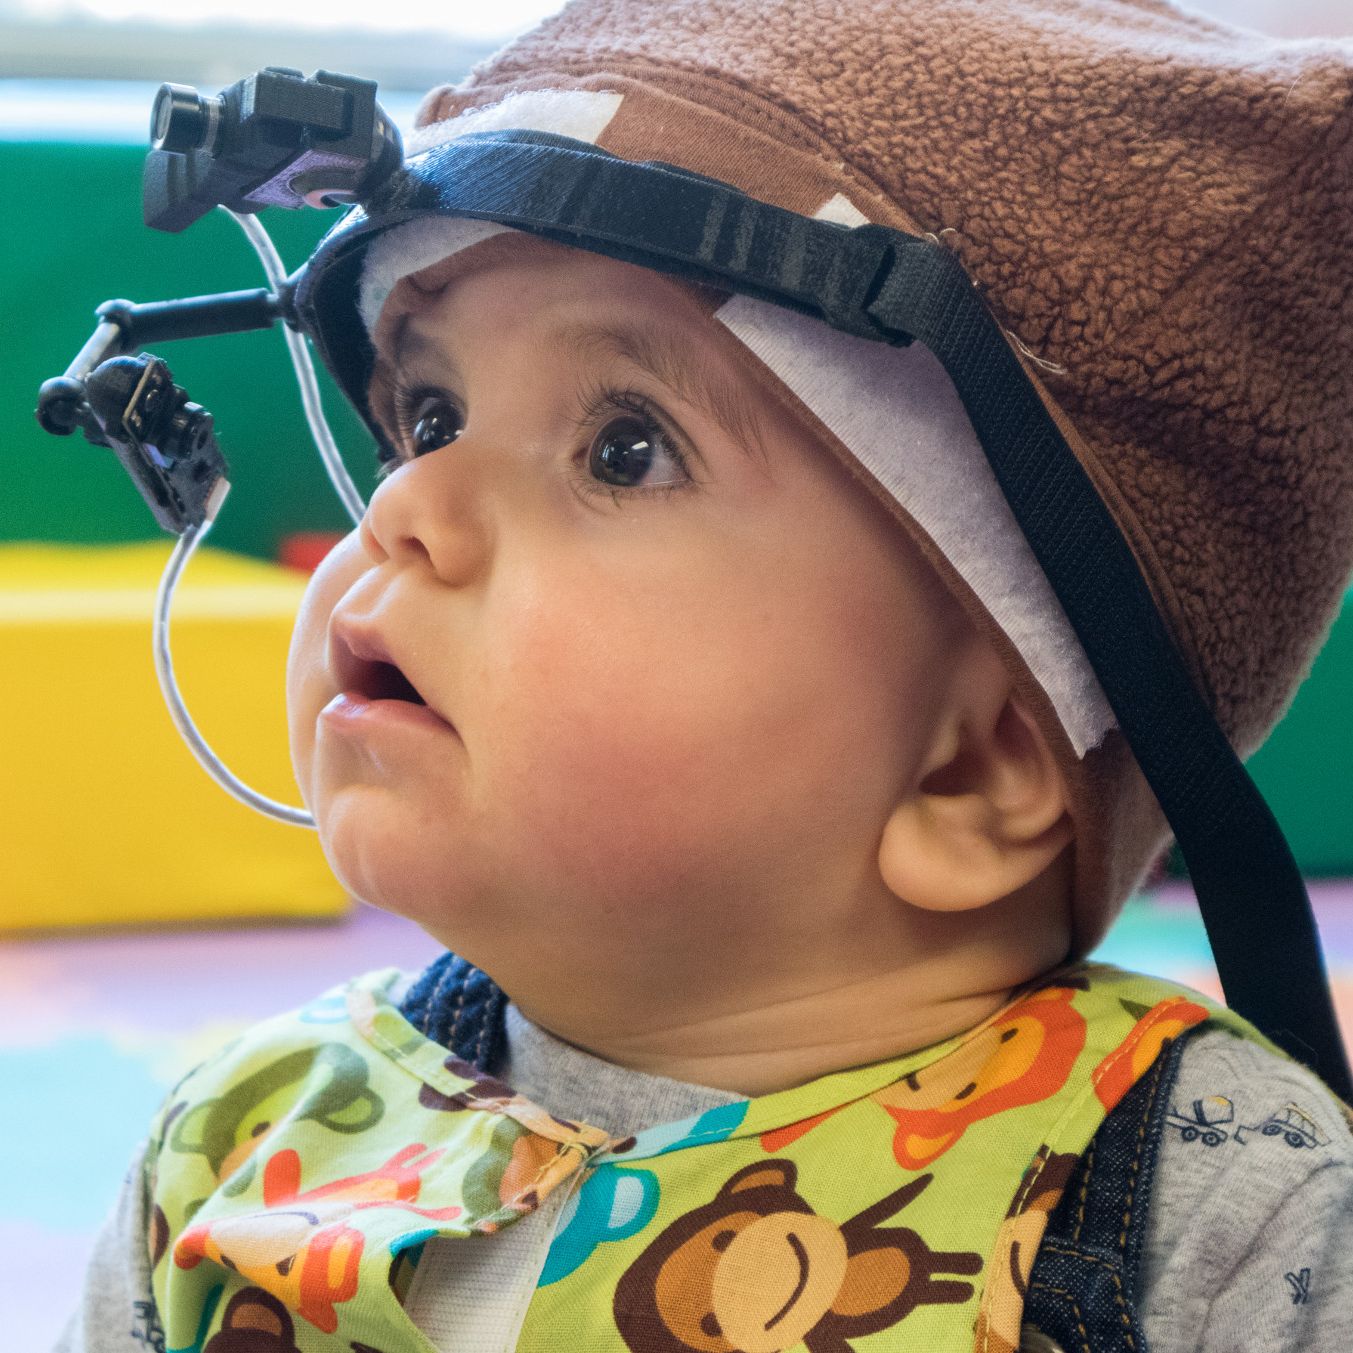 Child wears head-mounted camera. 